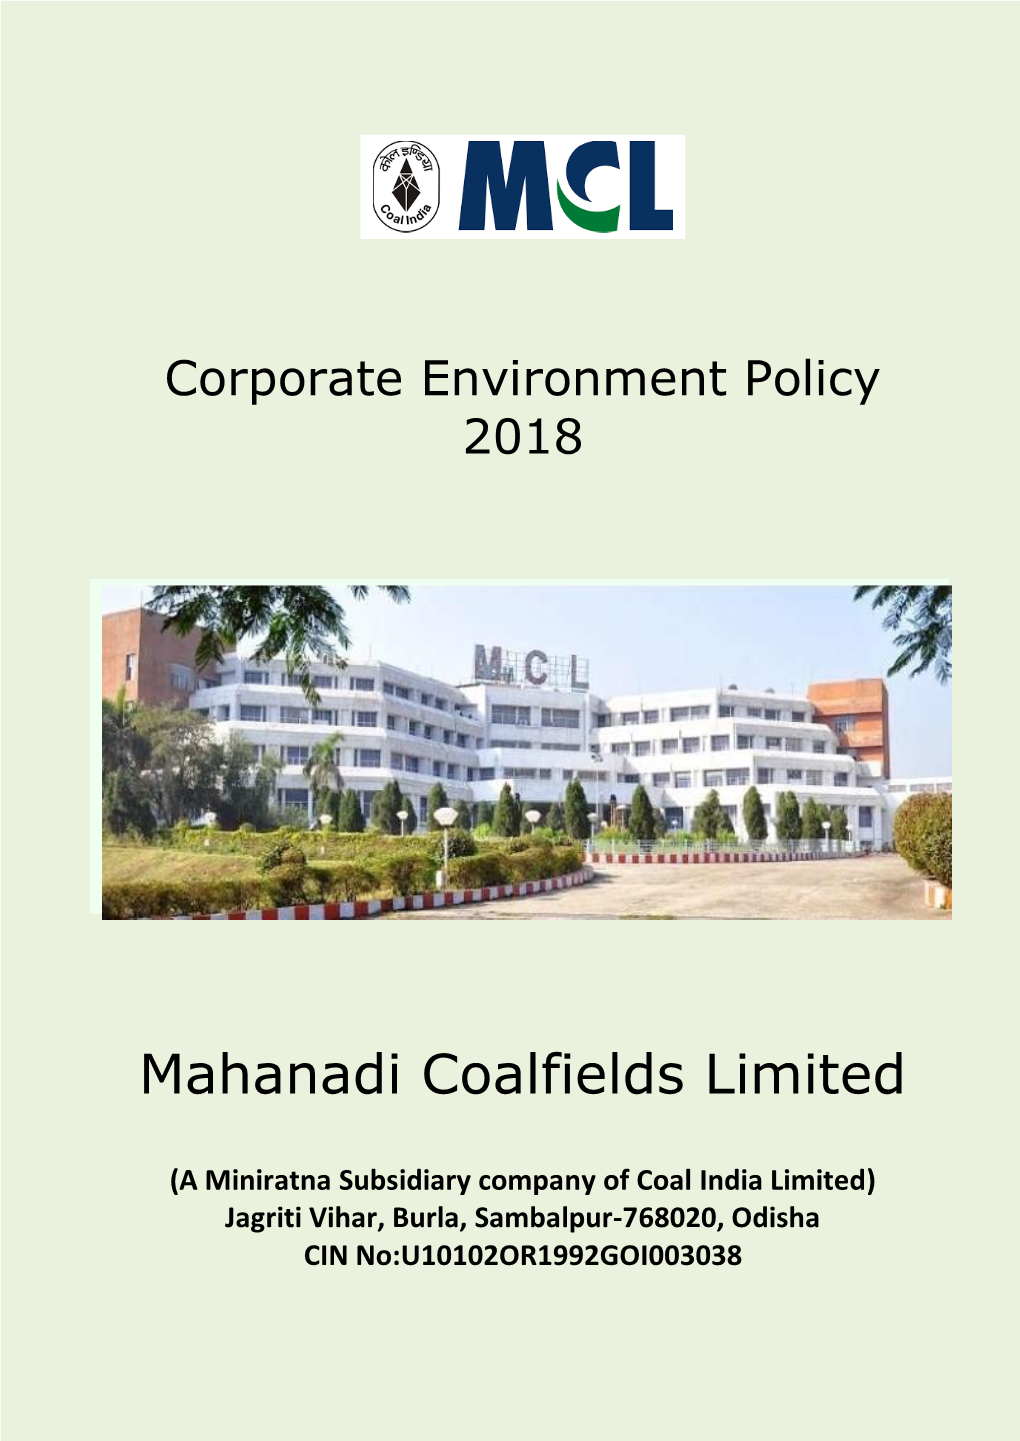 Mahanadi Coalfields Limited